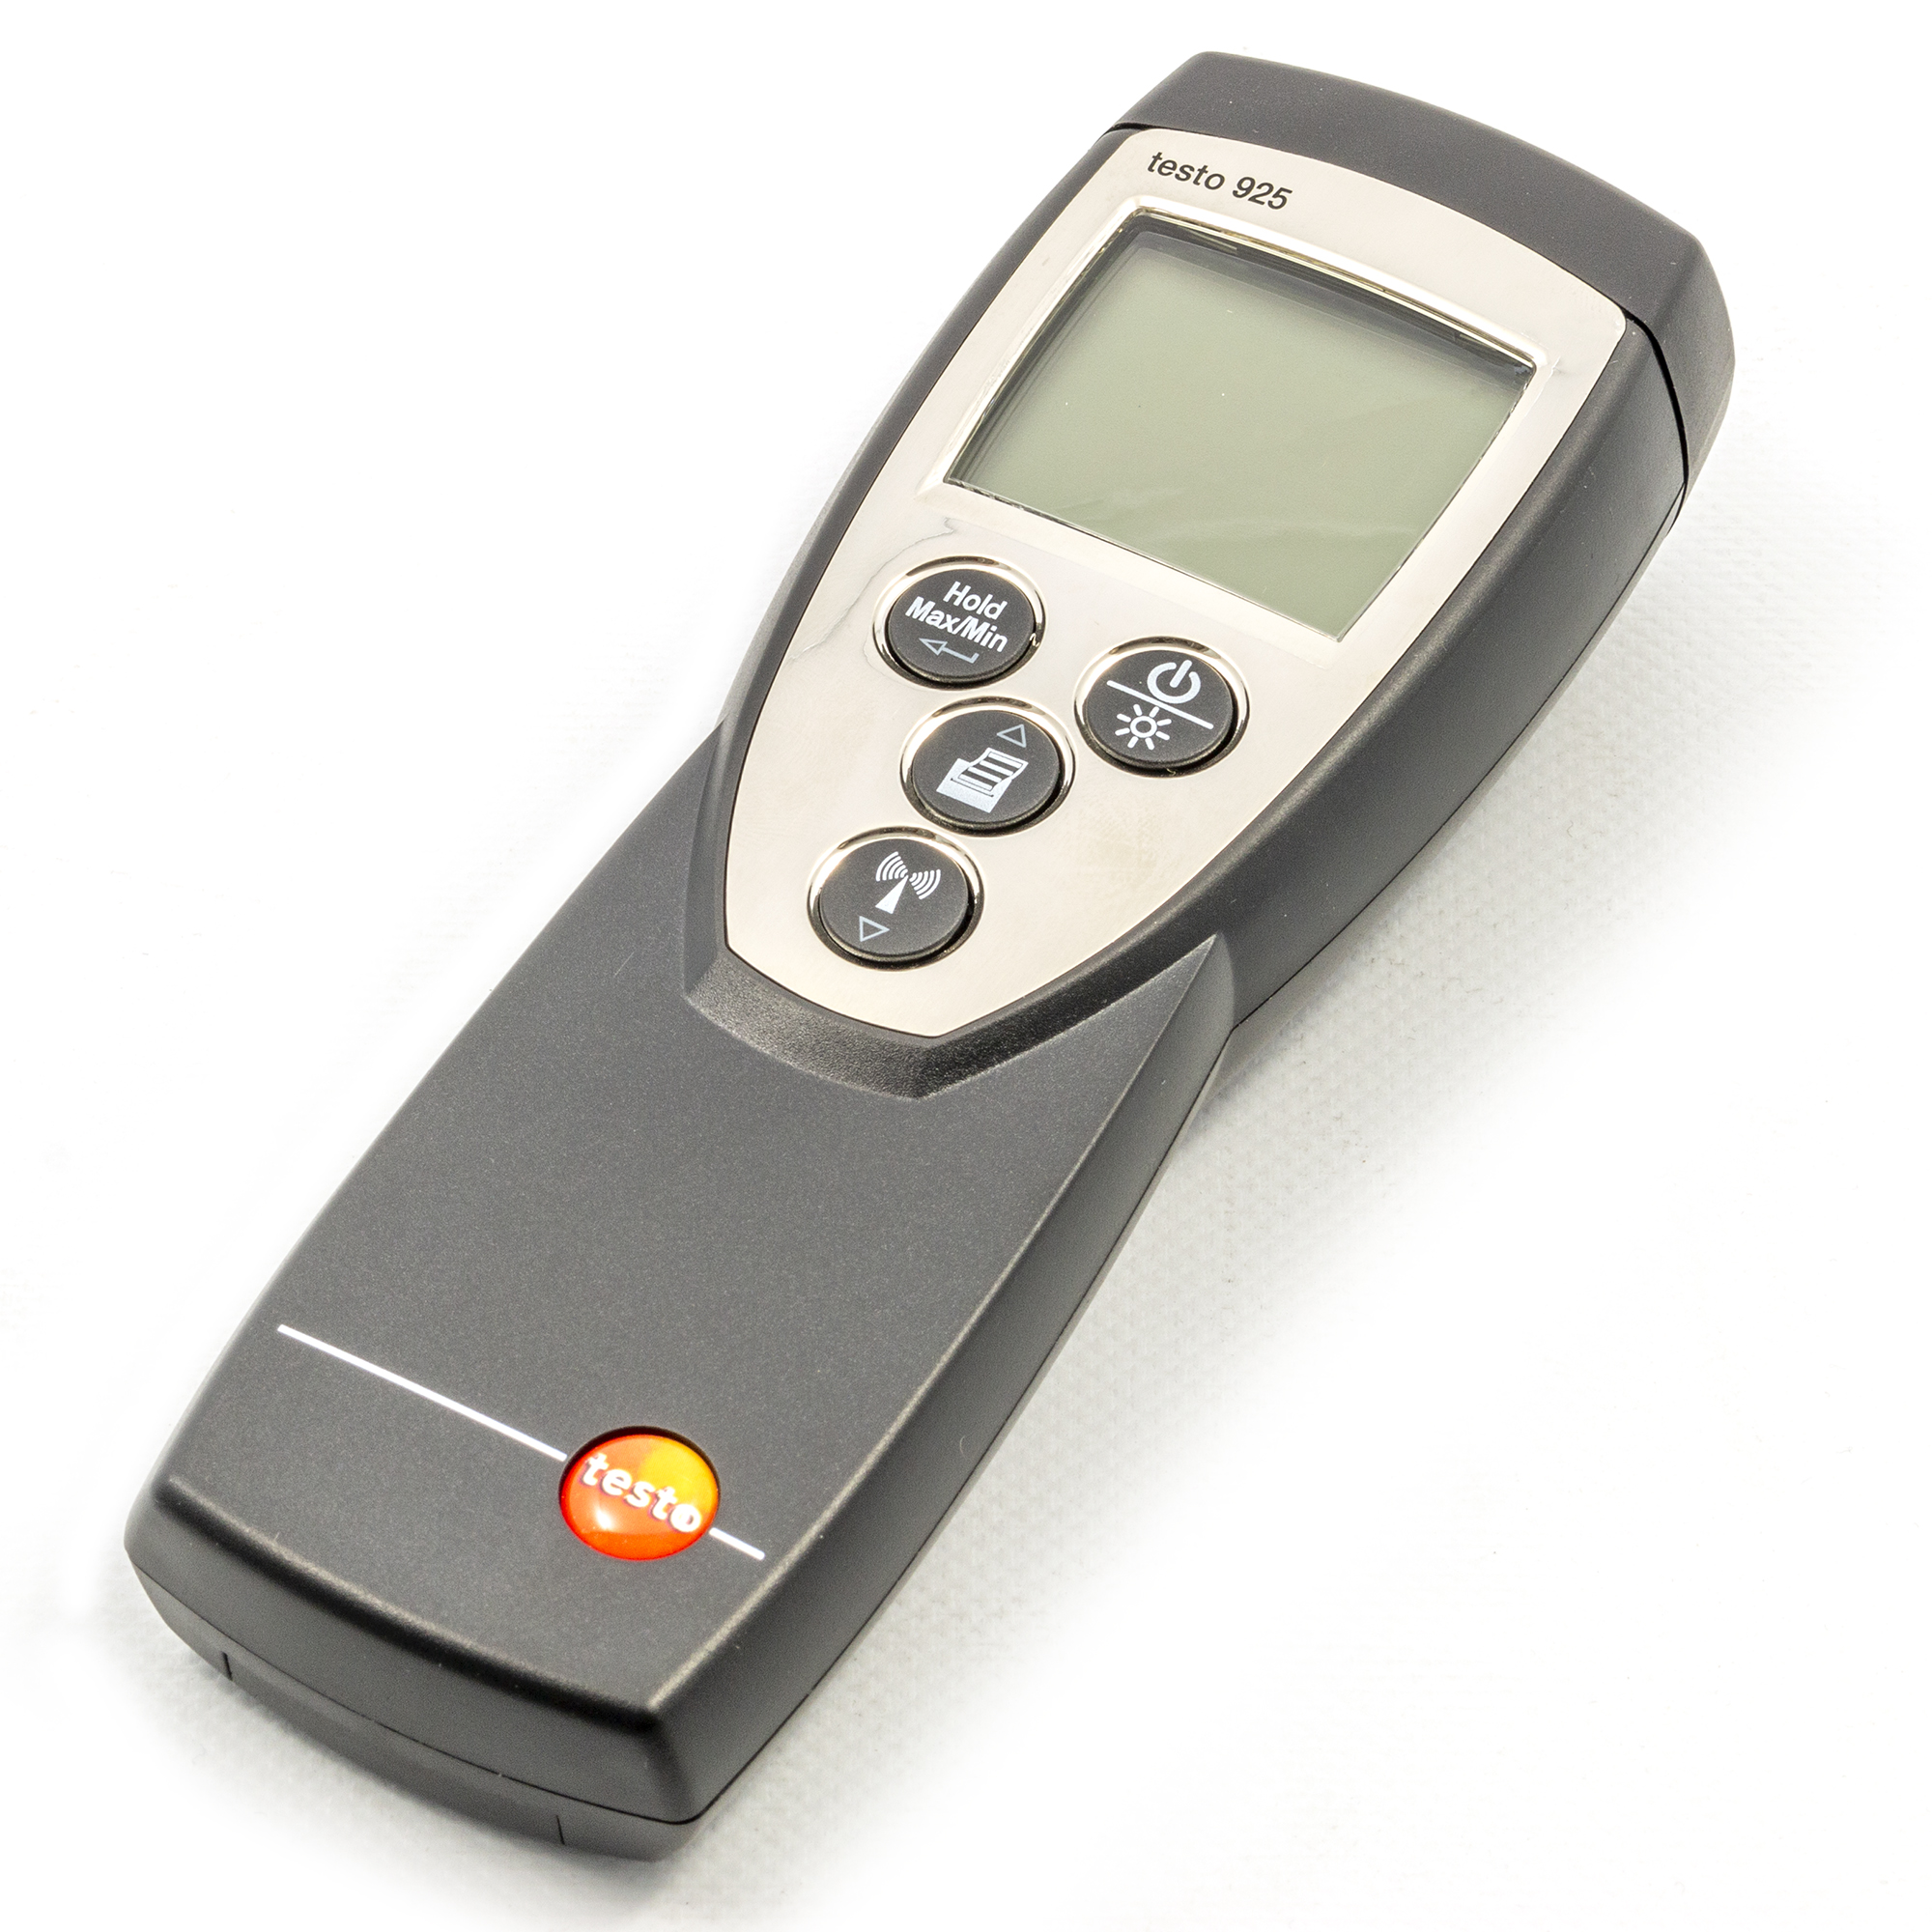 Digitale thermometer Testo 925 type K met DAkkS kalibratie